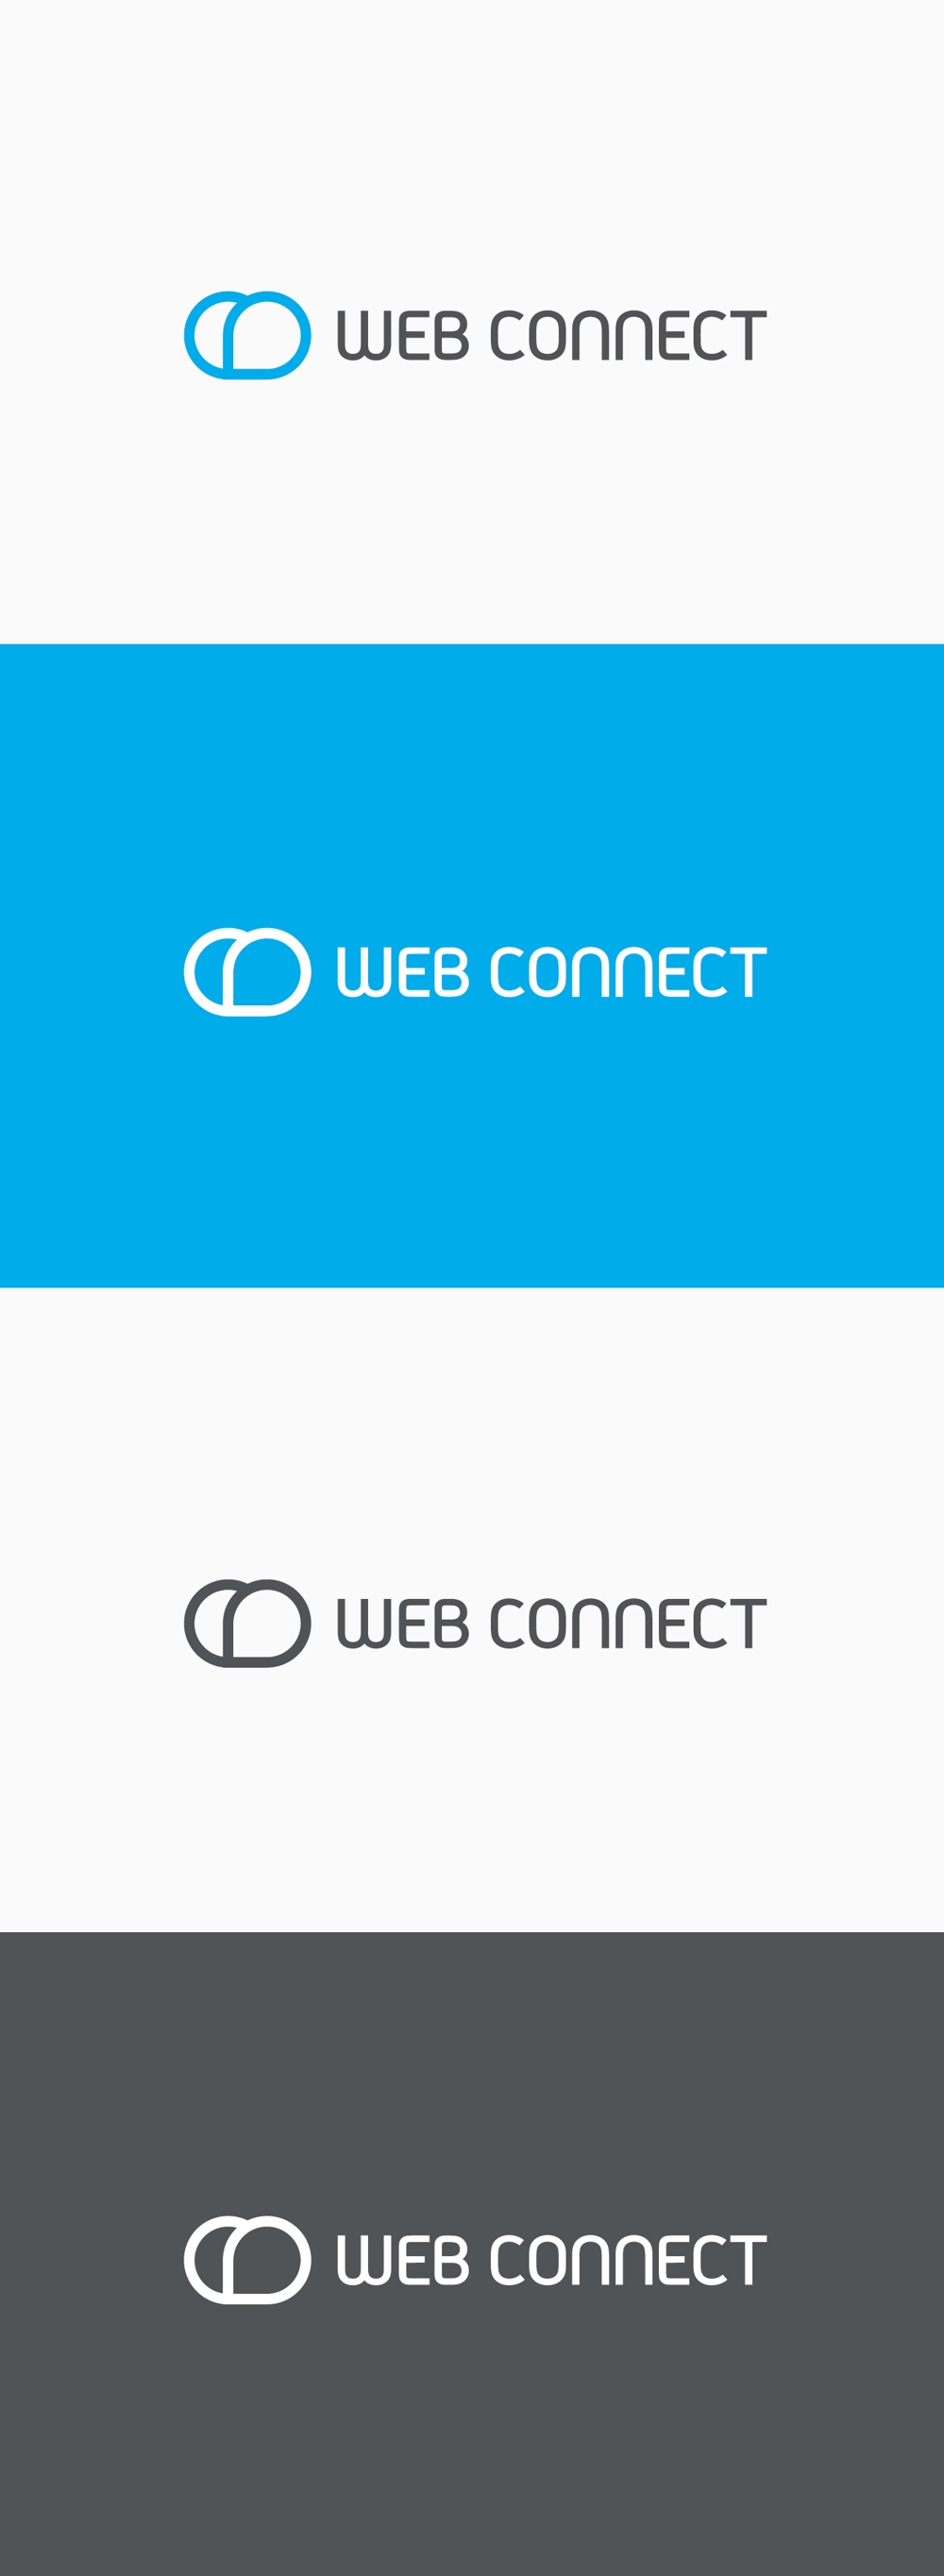 WebConnect3.jpg